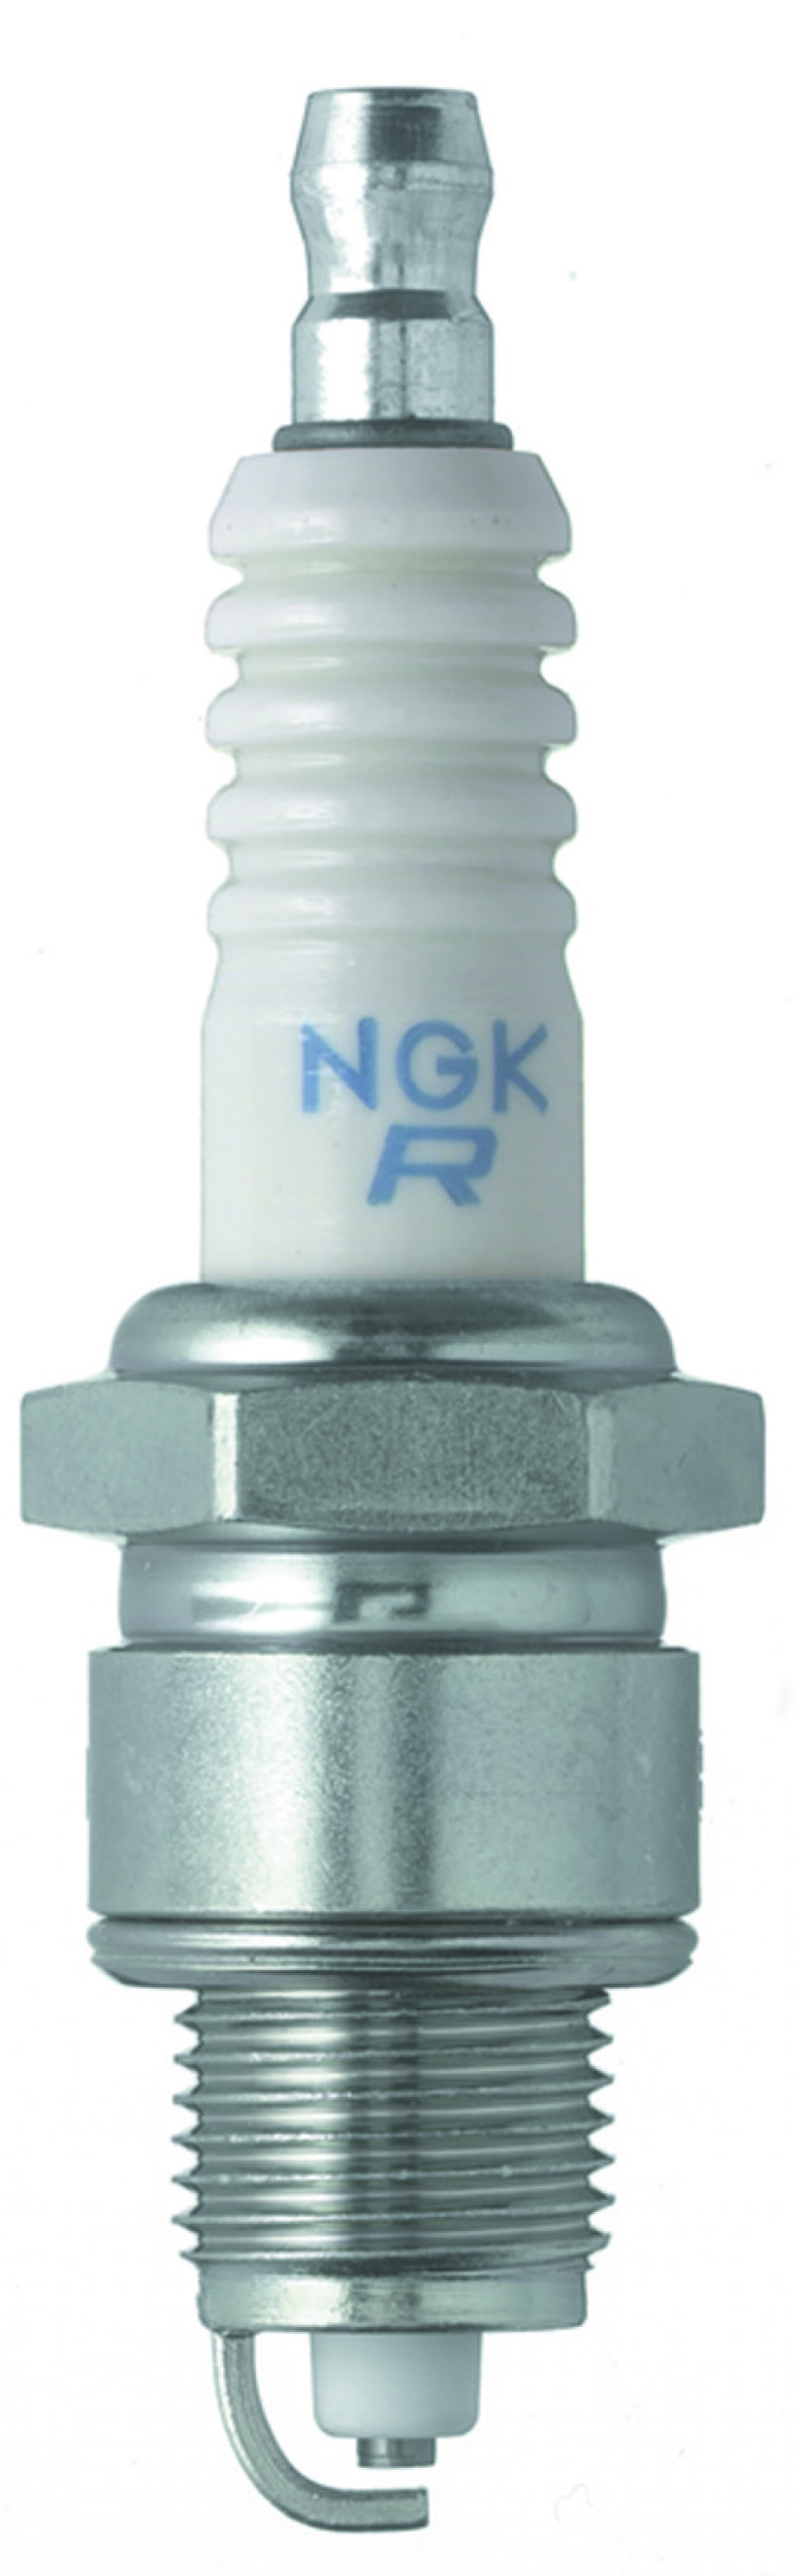 NGK BLYB Spark Plug Box of 6 (BPR7HS) - 1503